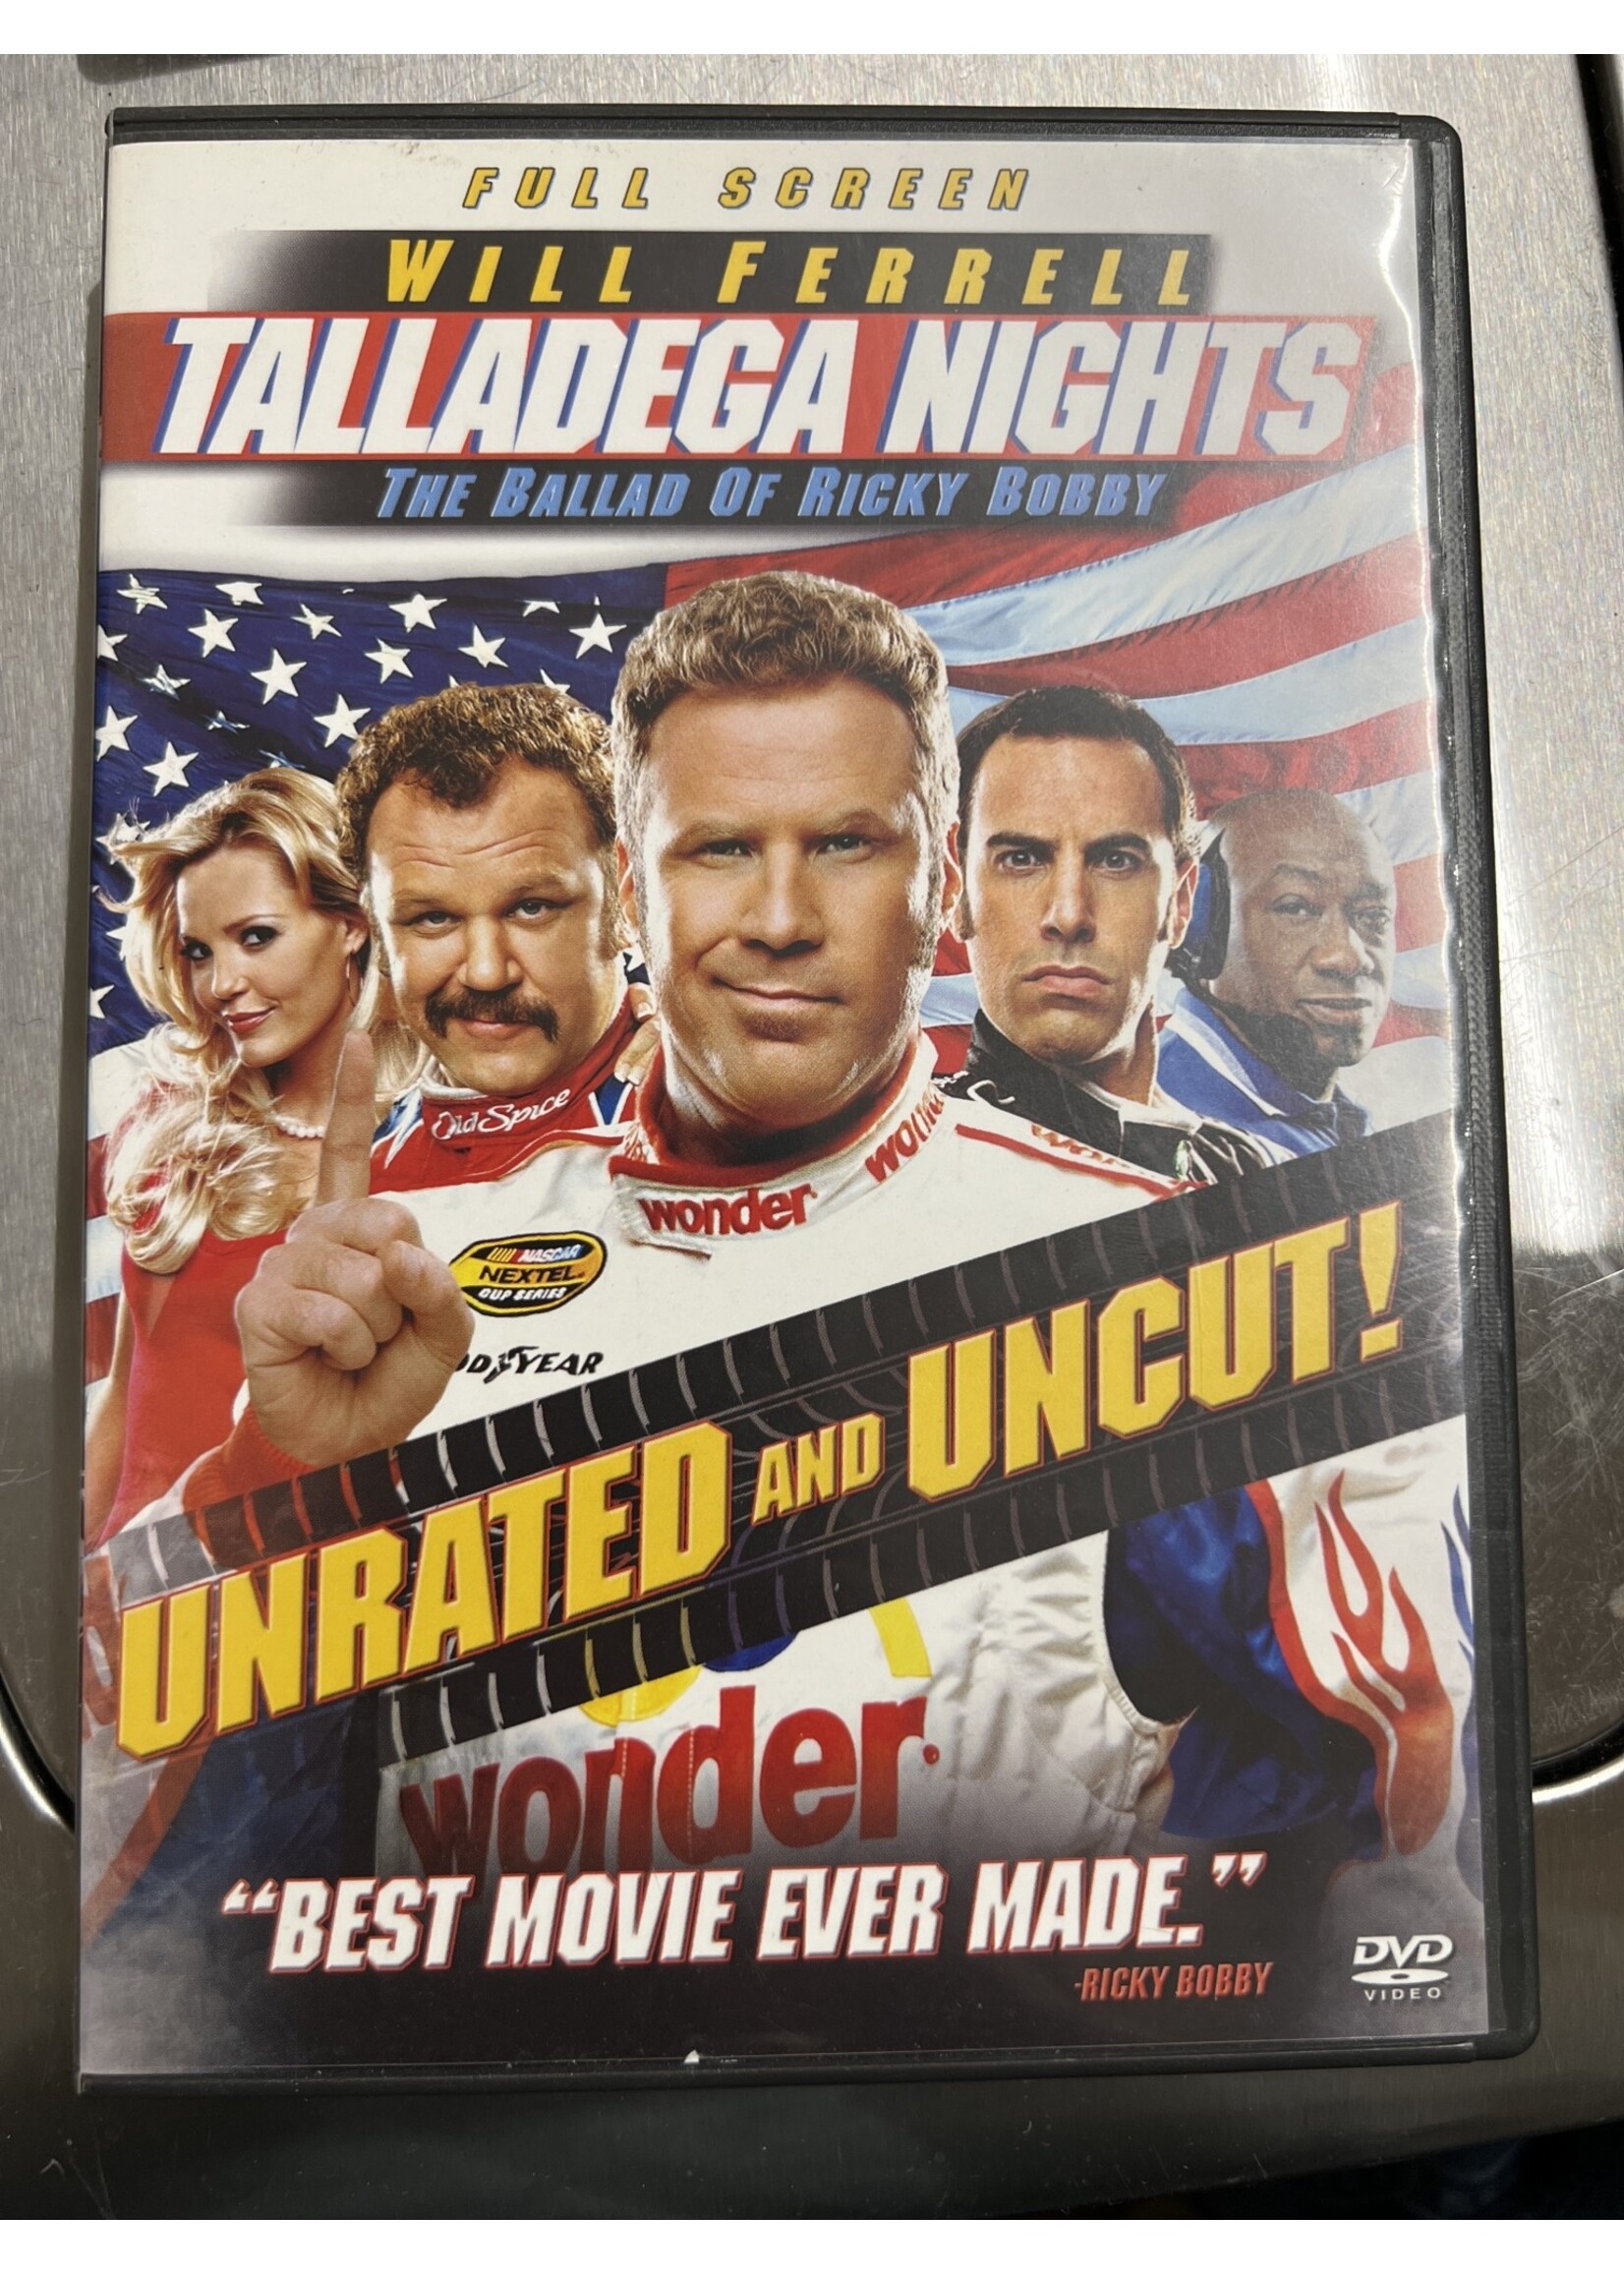 Talladega Nights DVD full screen